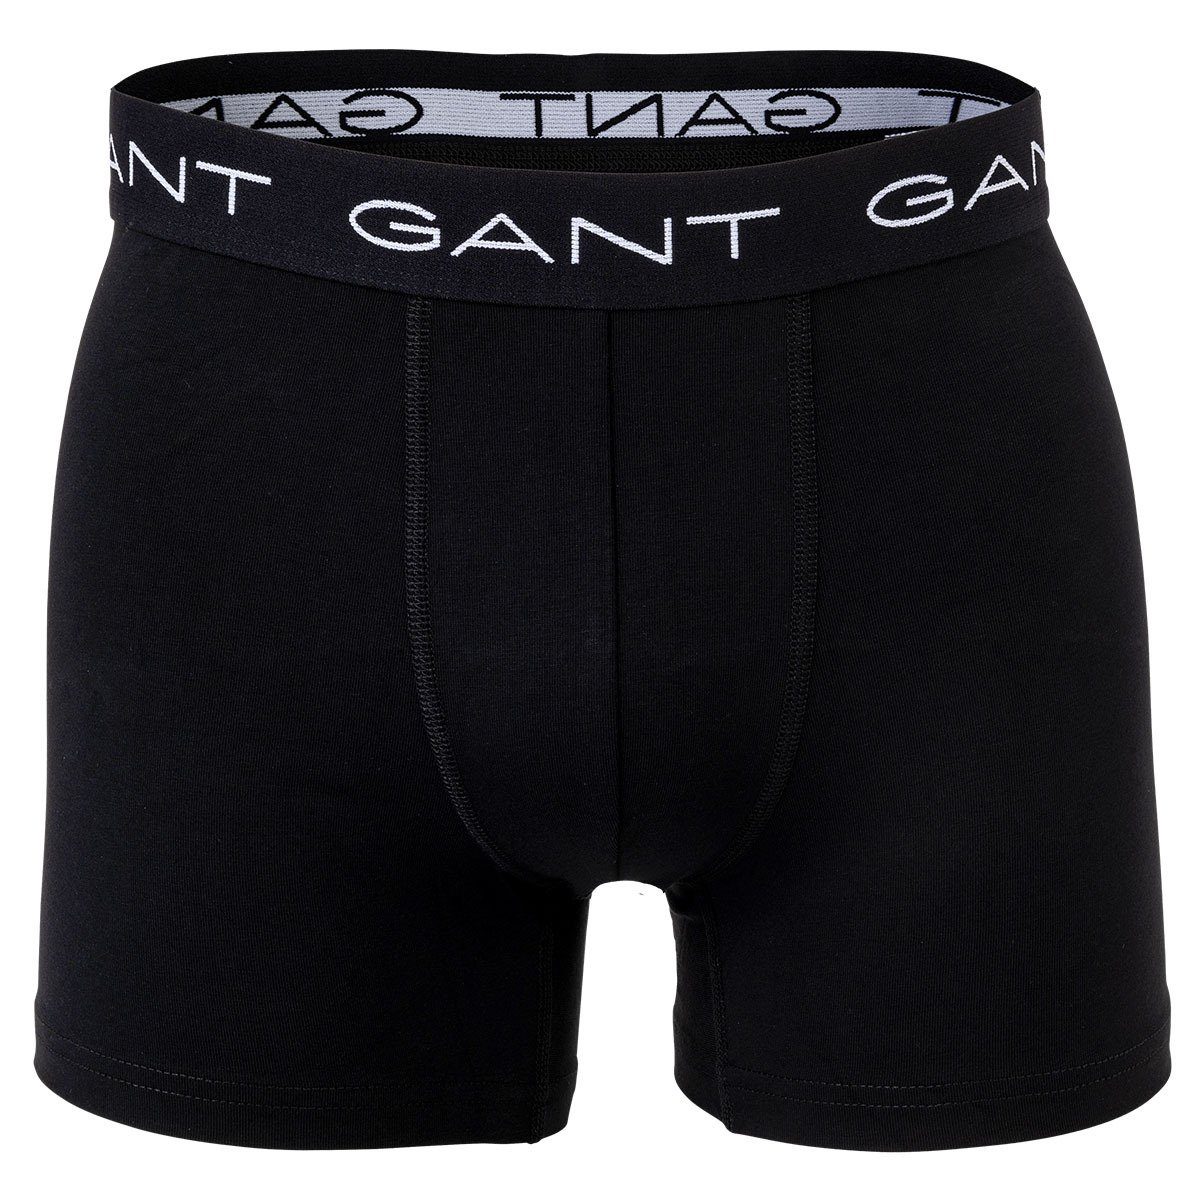 Gant Boxer Herren Boxer Schwarz 3er - Shorts, Boxer Pack Briefs